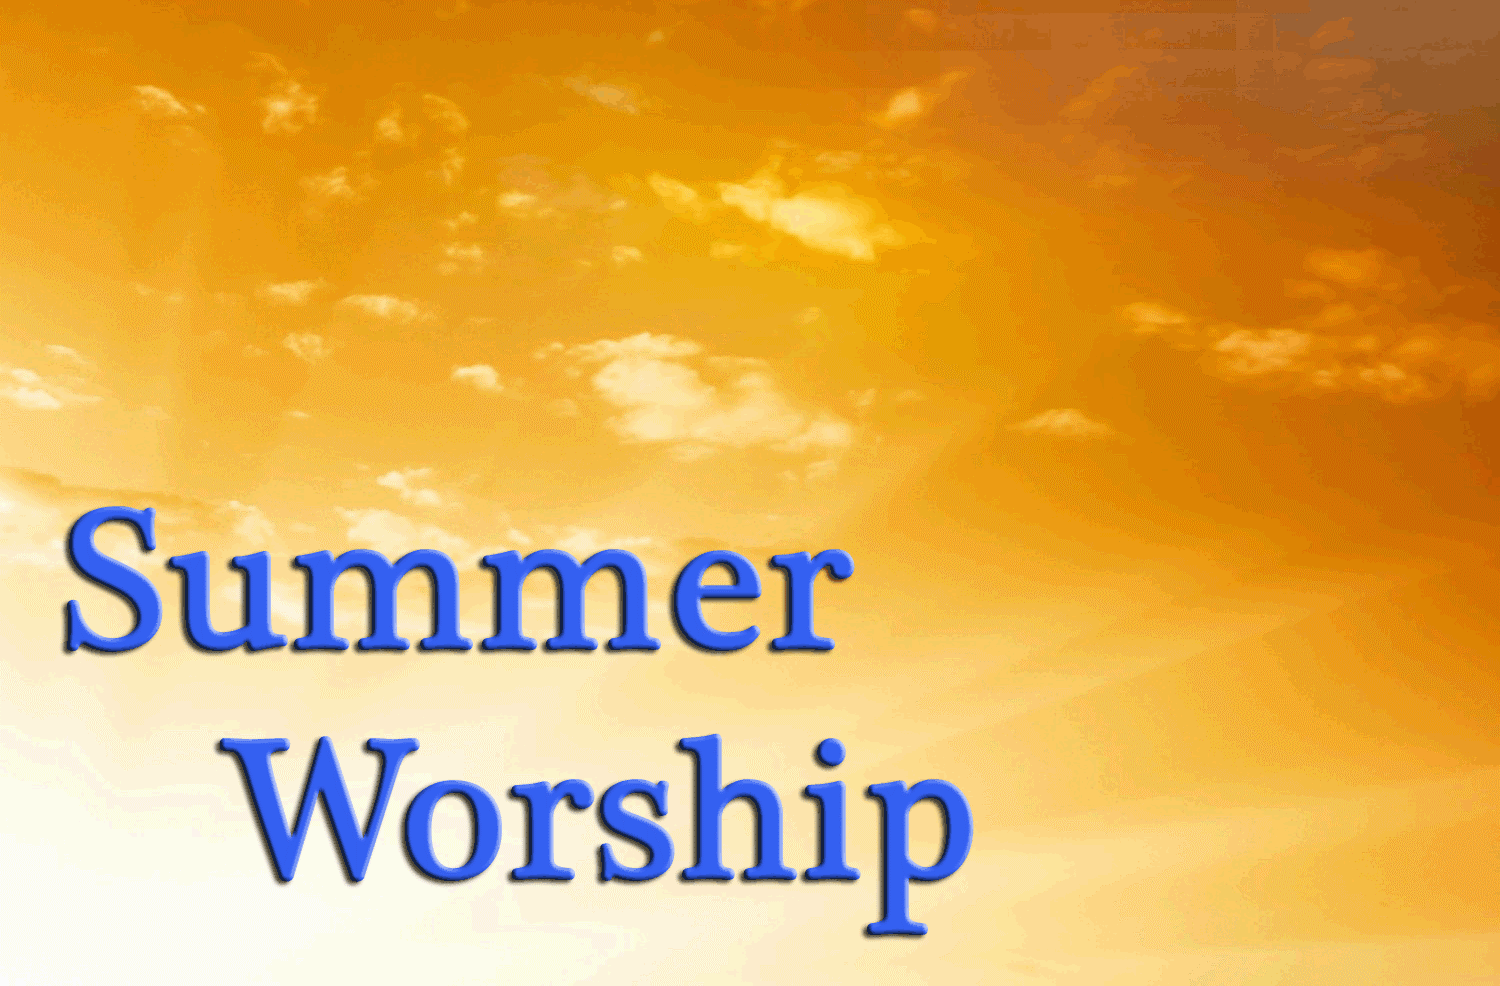 summer worship clipart - photo #6